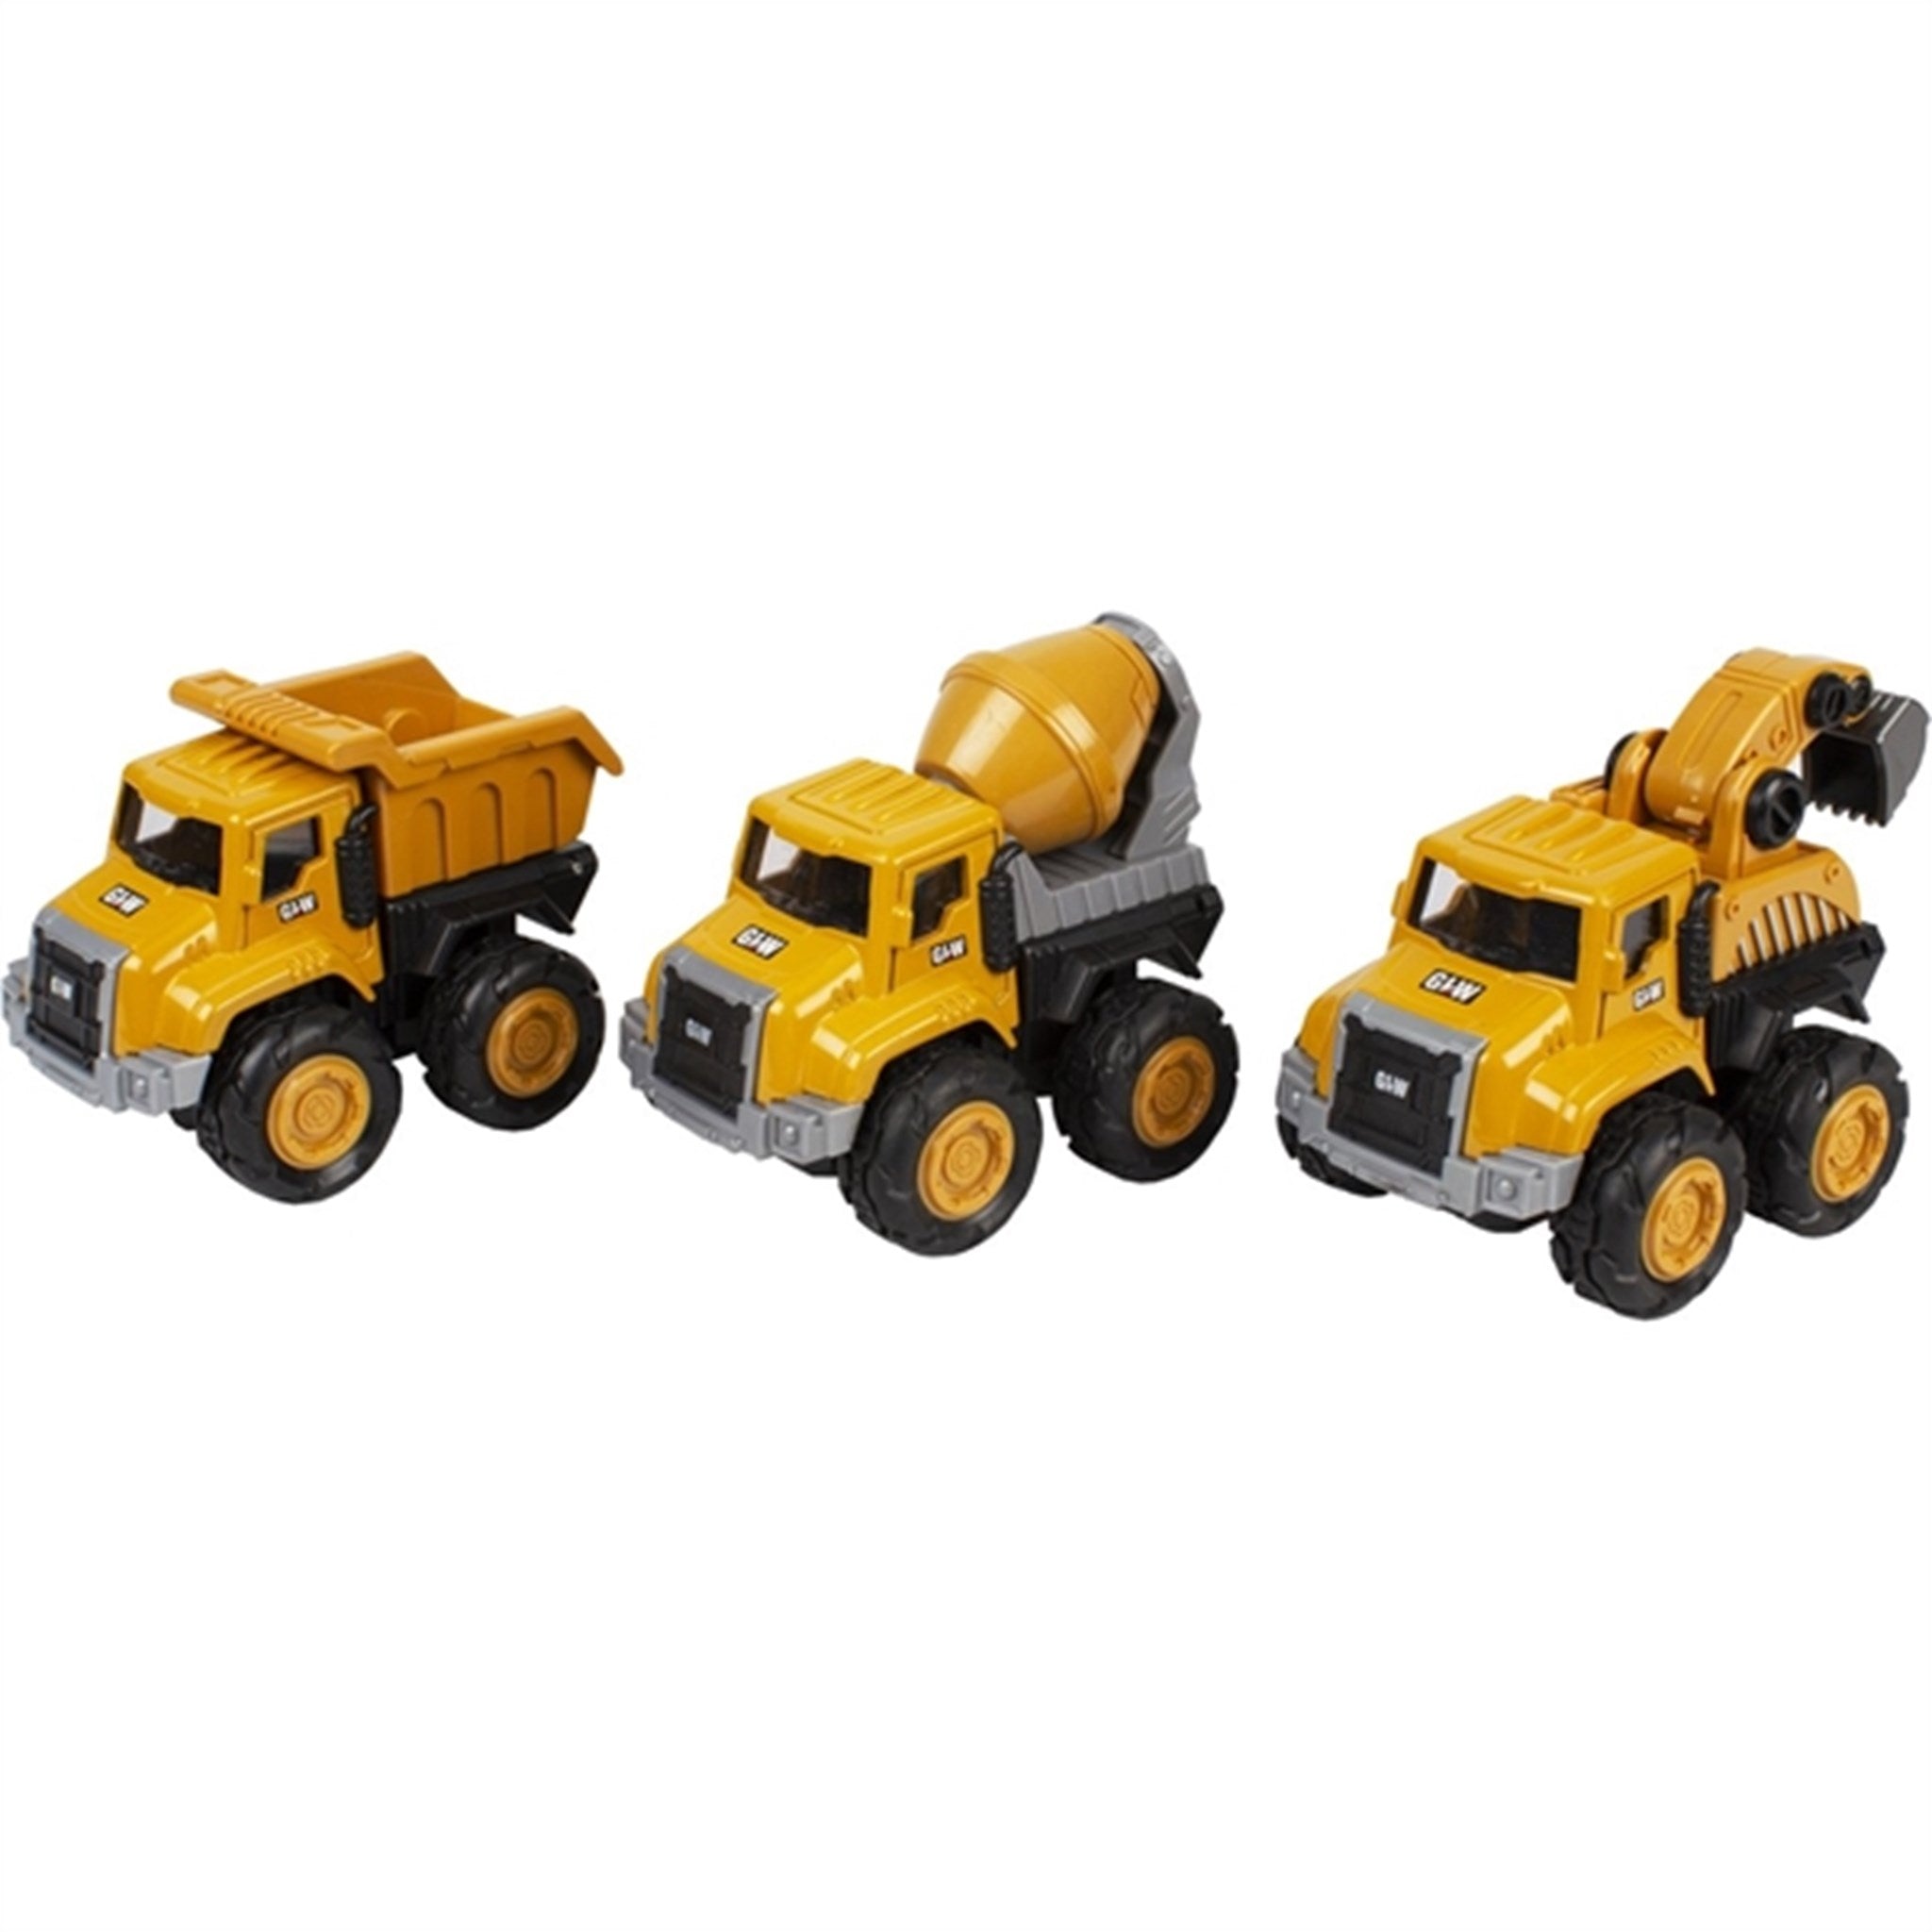 Magni Construction Vehicles with Inertia Excavator 2